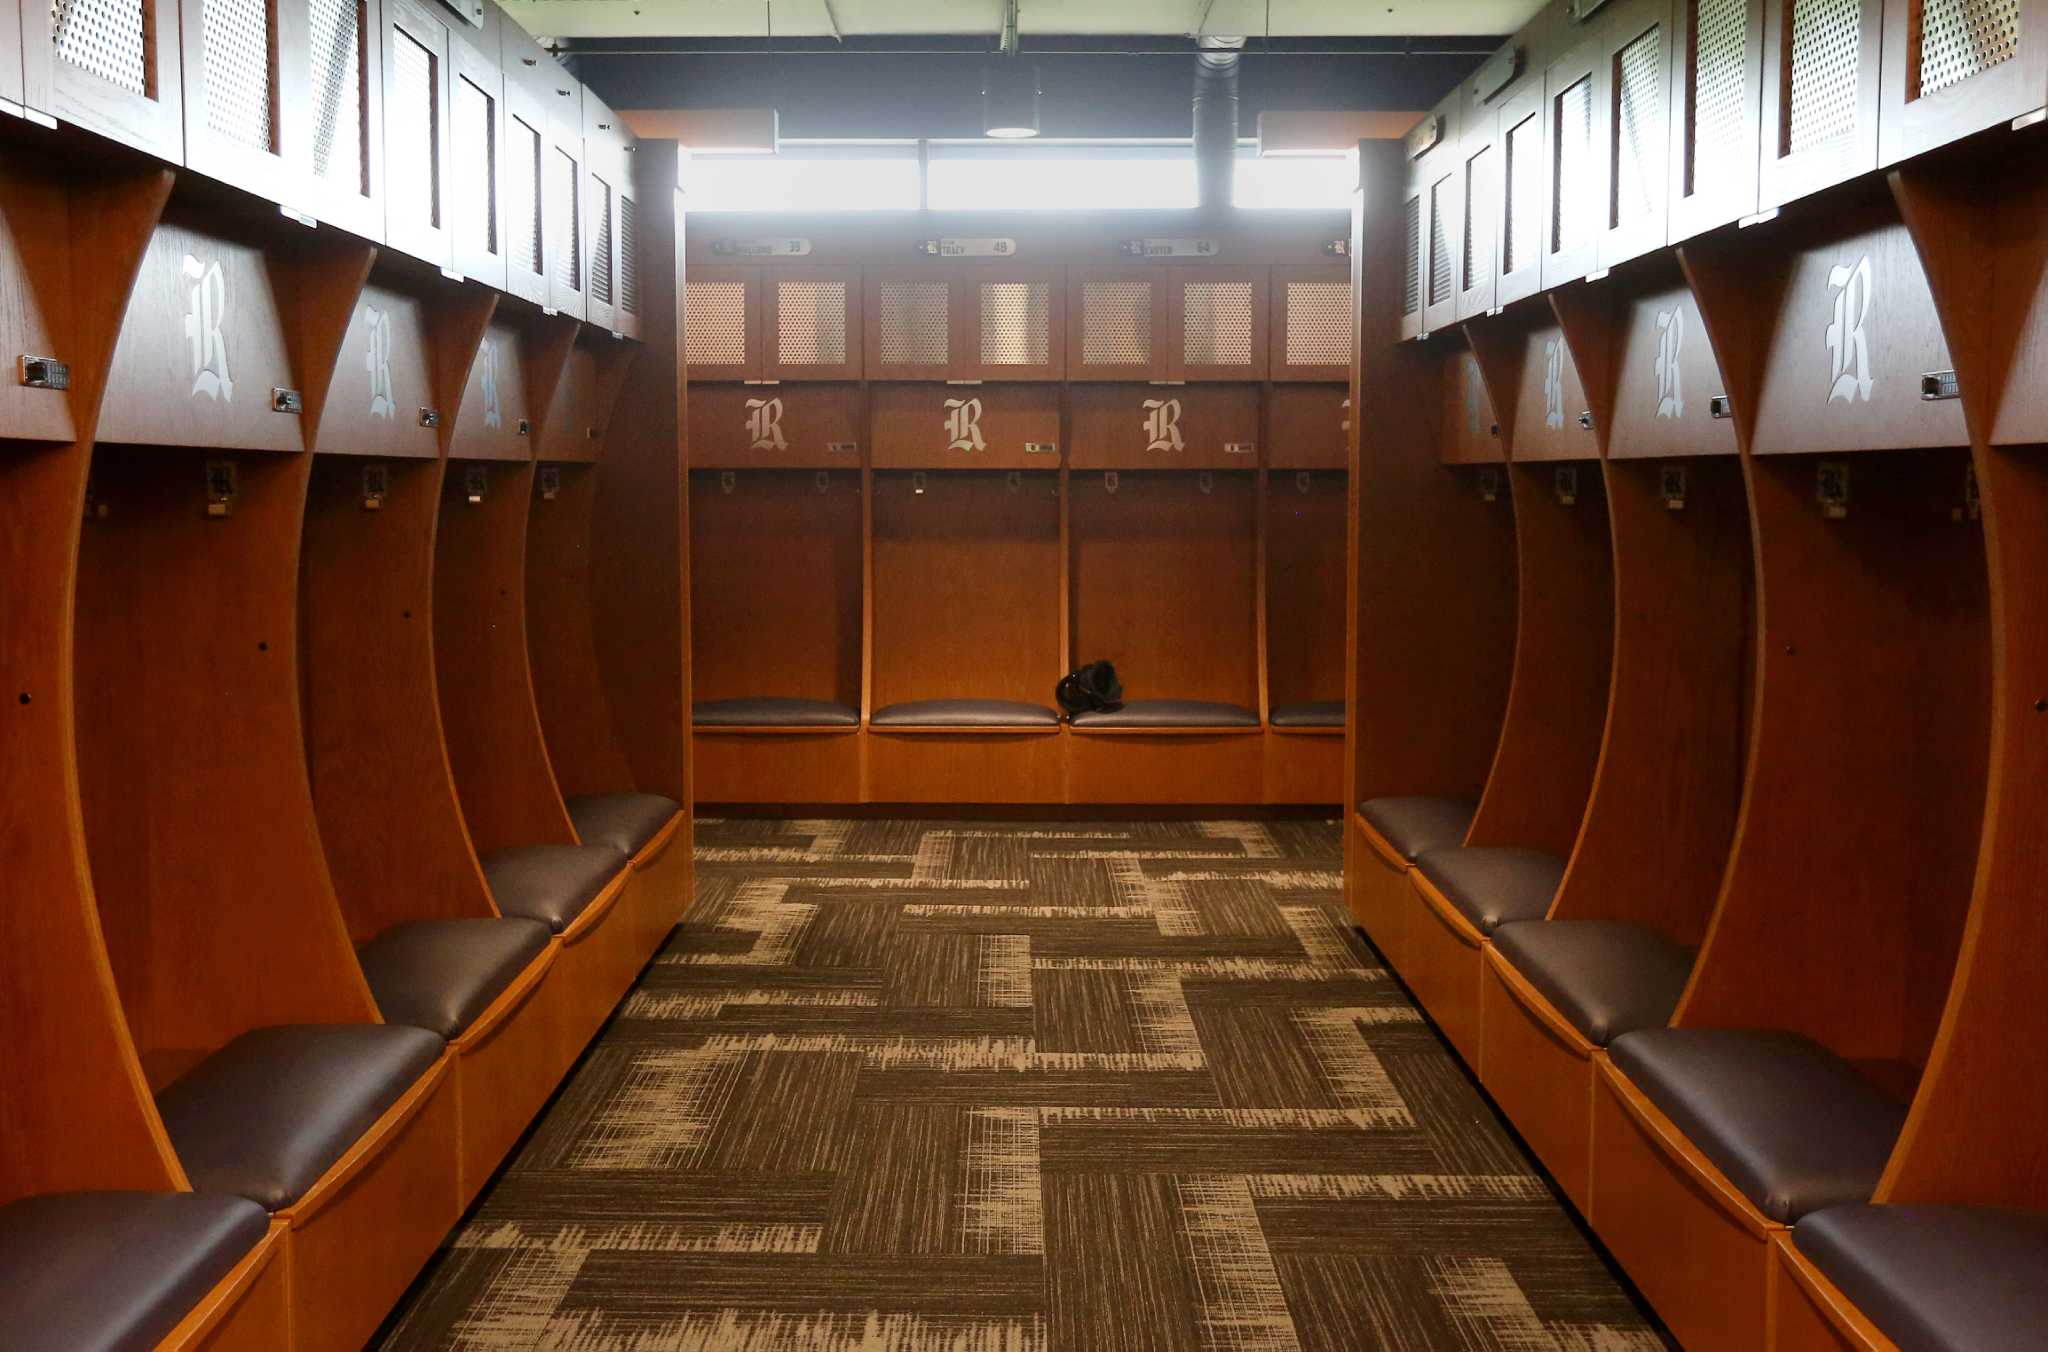 Photos: Take a tour inside Rice's new athletic facility - Houston Chronicle